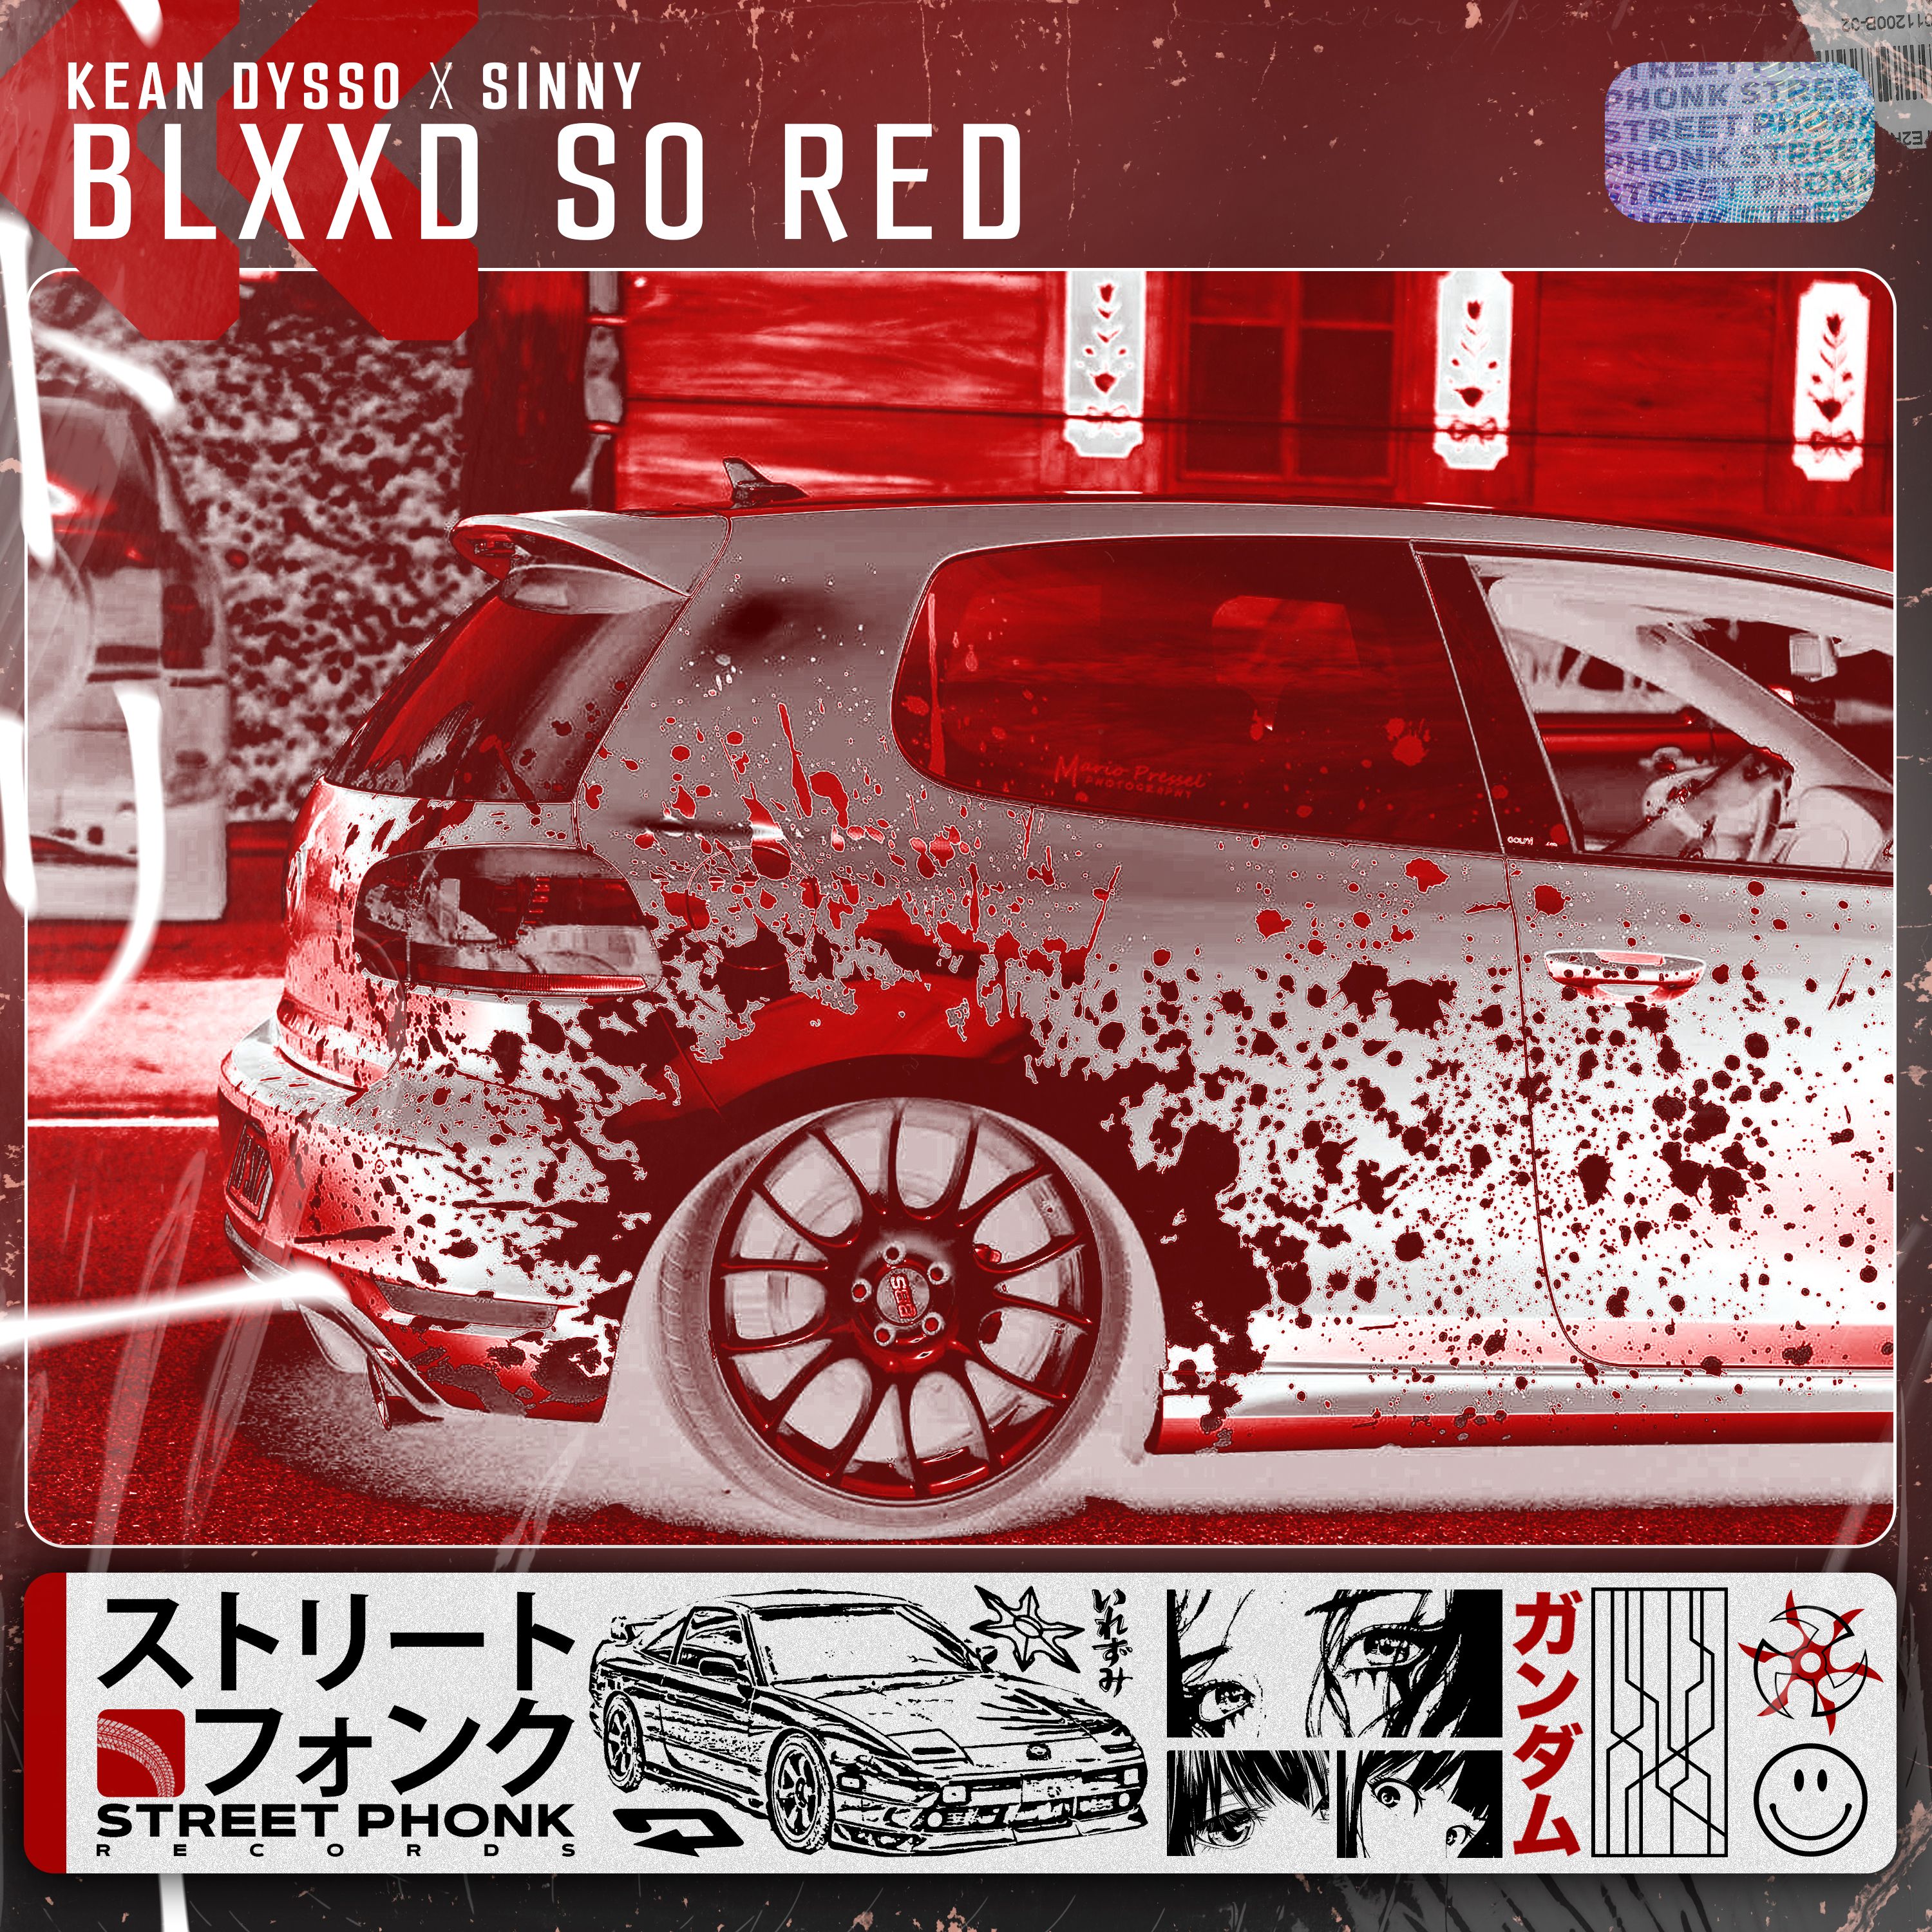 Download KEAN DYSSO & Sinny - BLXXD SO RED